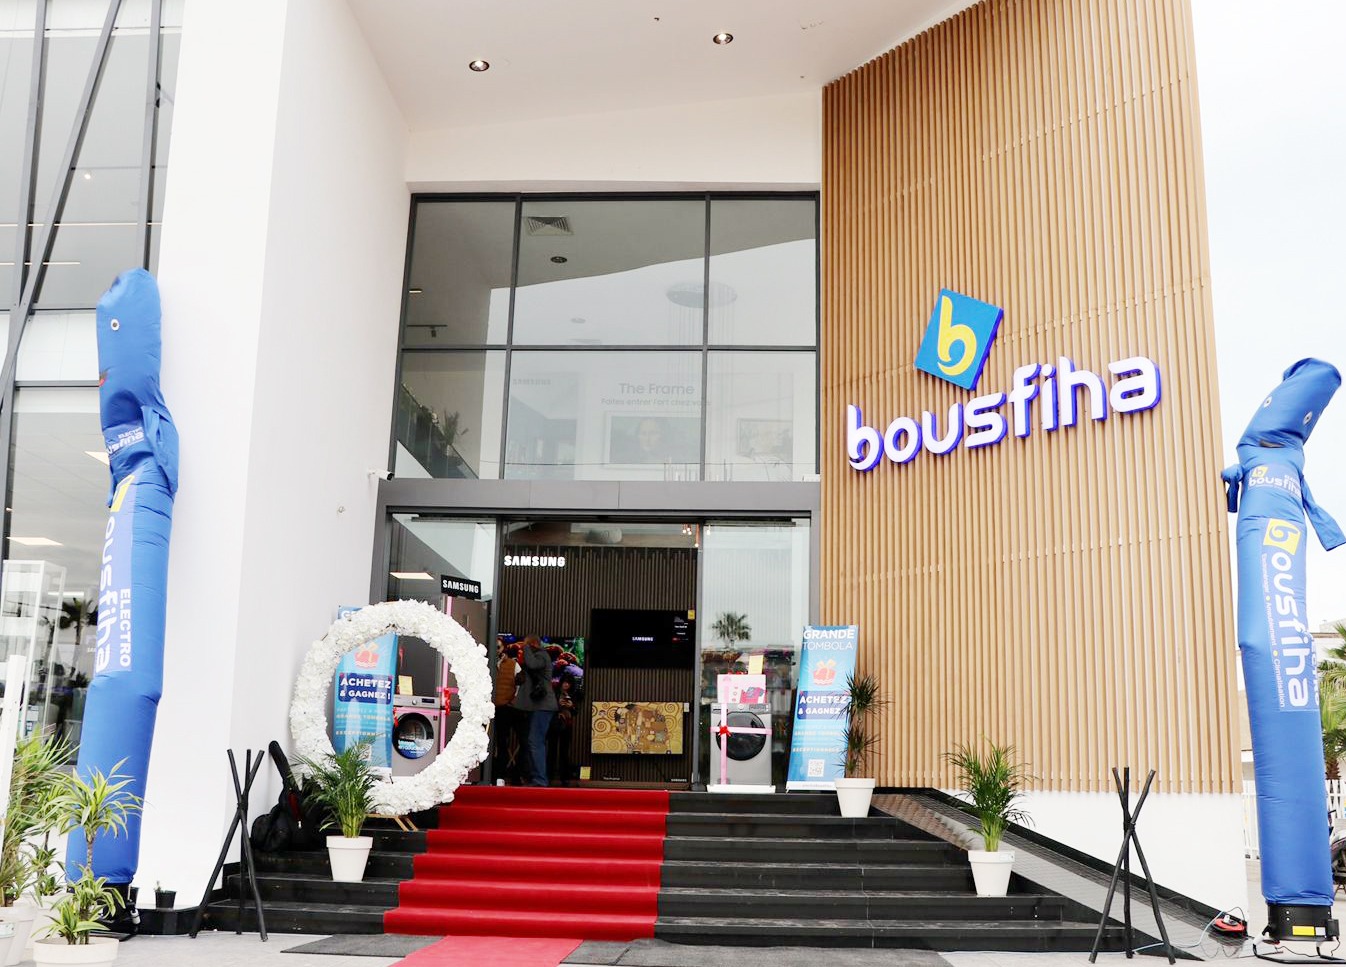 Dar Bouazza: ElectroBousfiha opens its largest Showroom